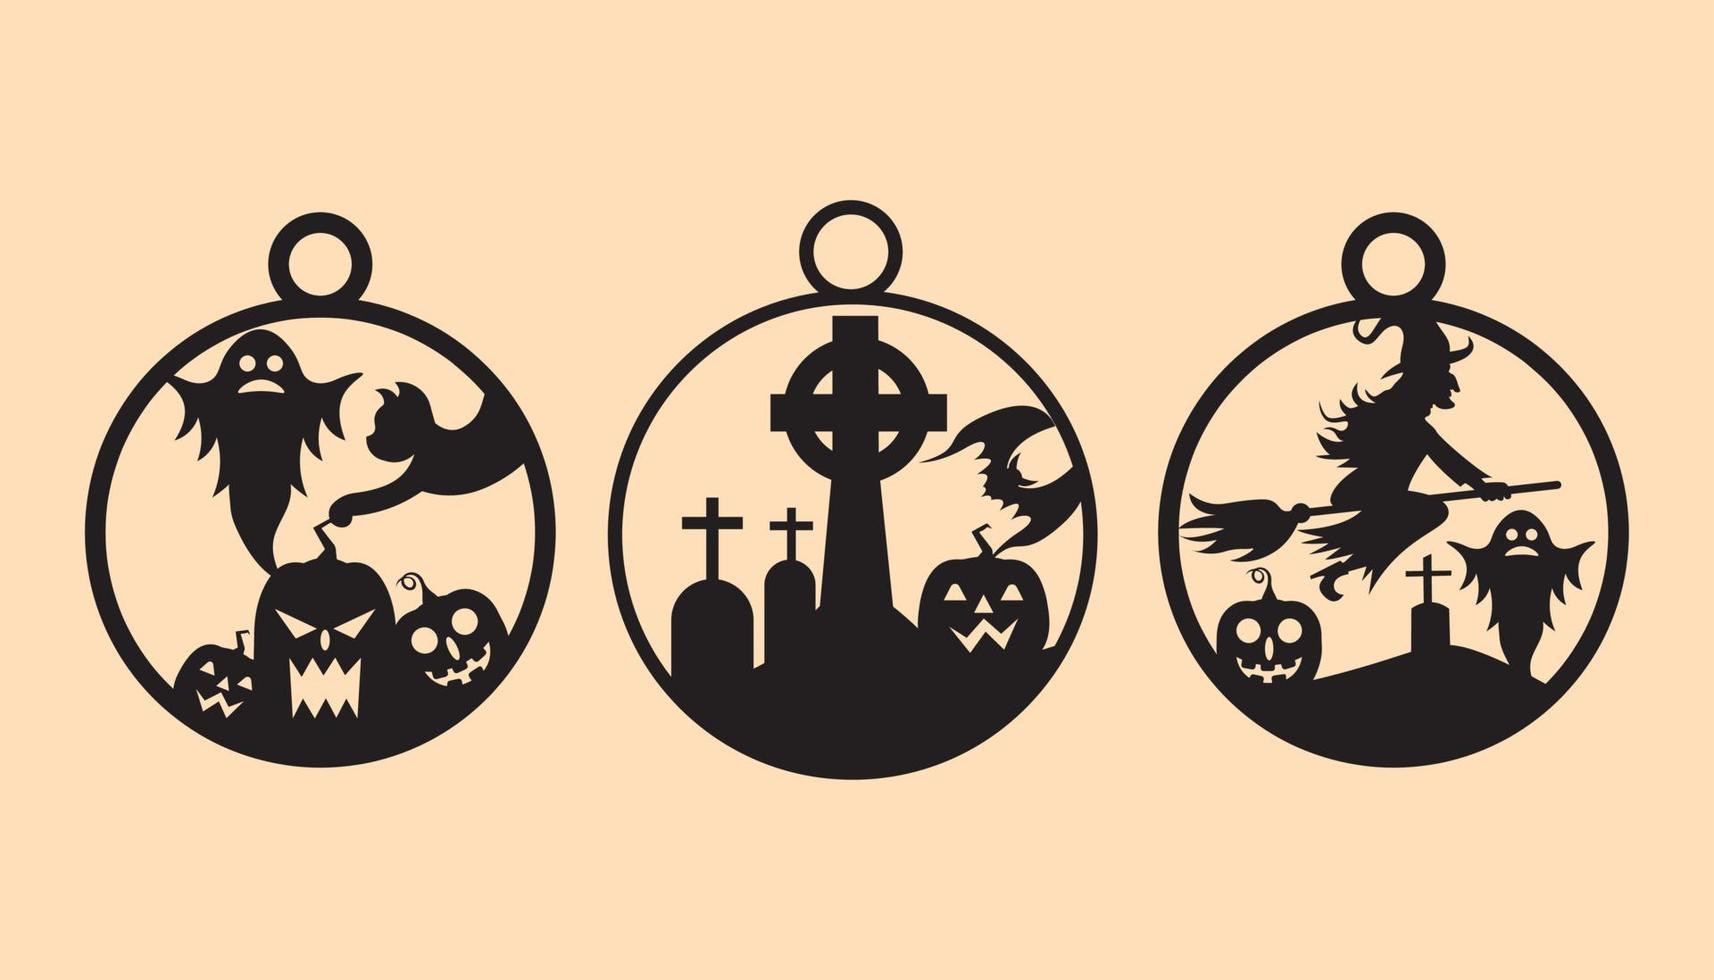 Halloween ornaments element vector set